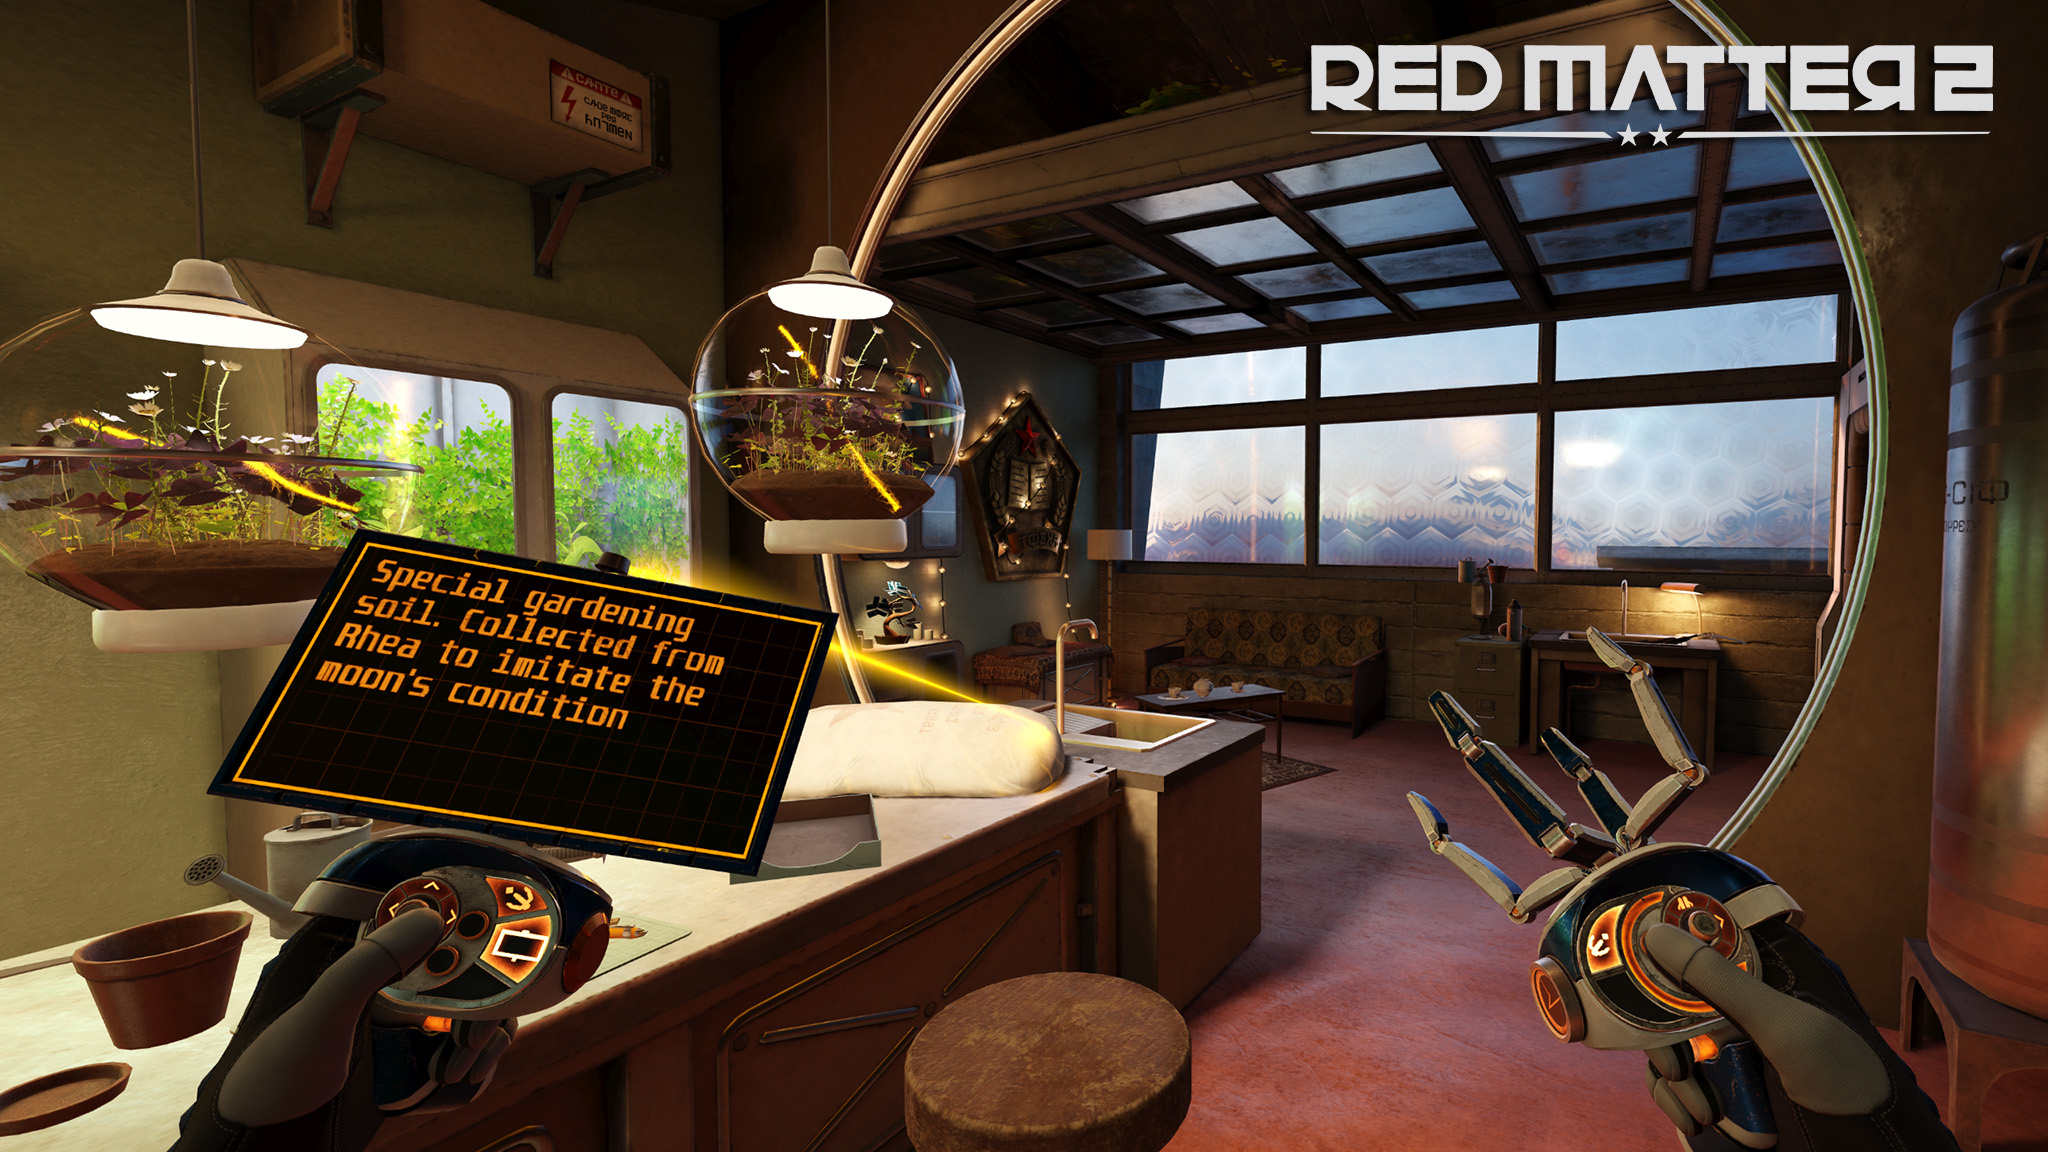 Red Matter 2 screenshot from the Quest 2